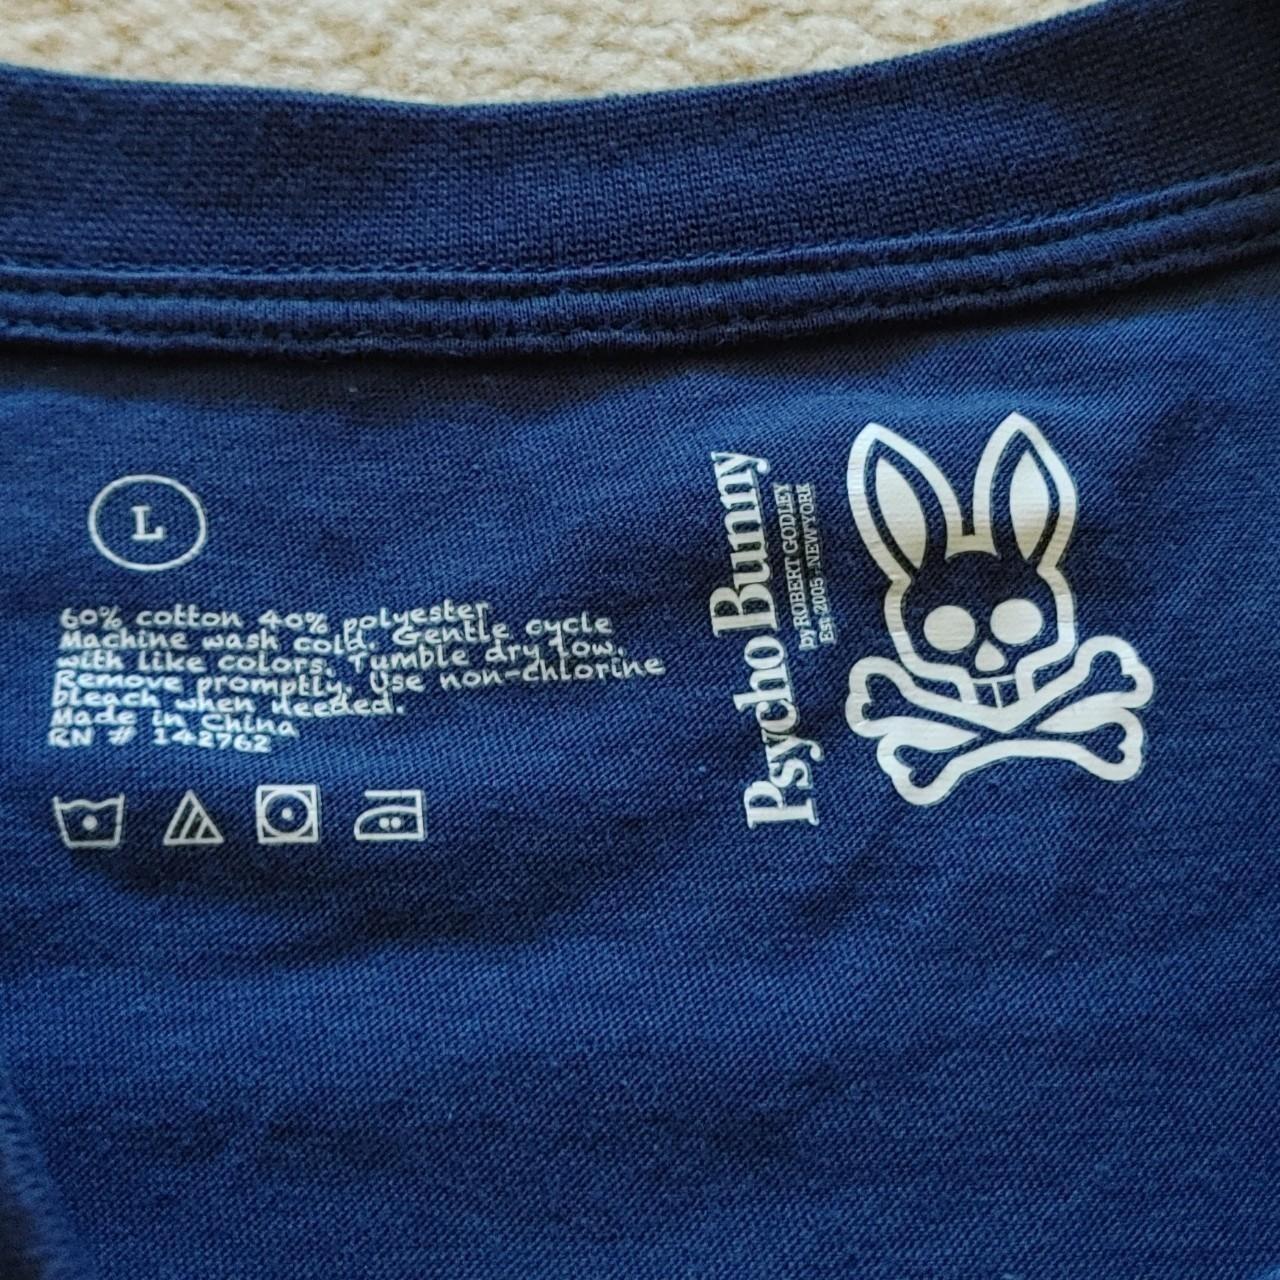 Psycho Bunny Men's Navy and Blue T-shirt (4)